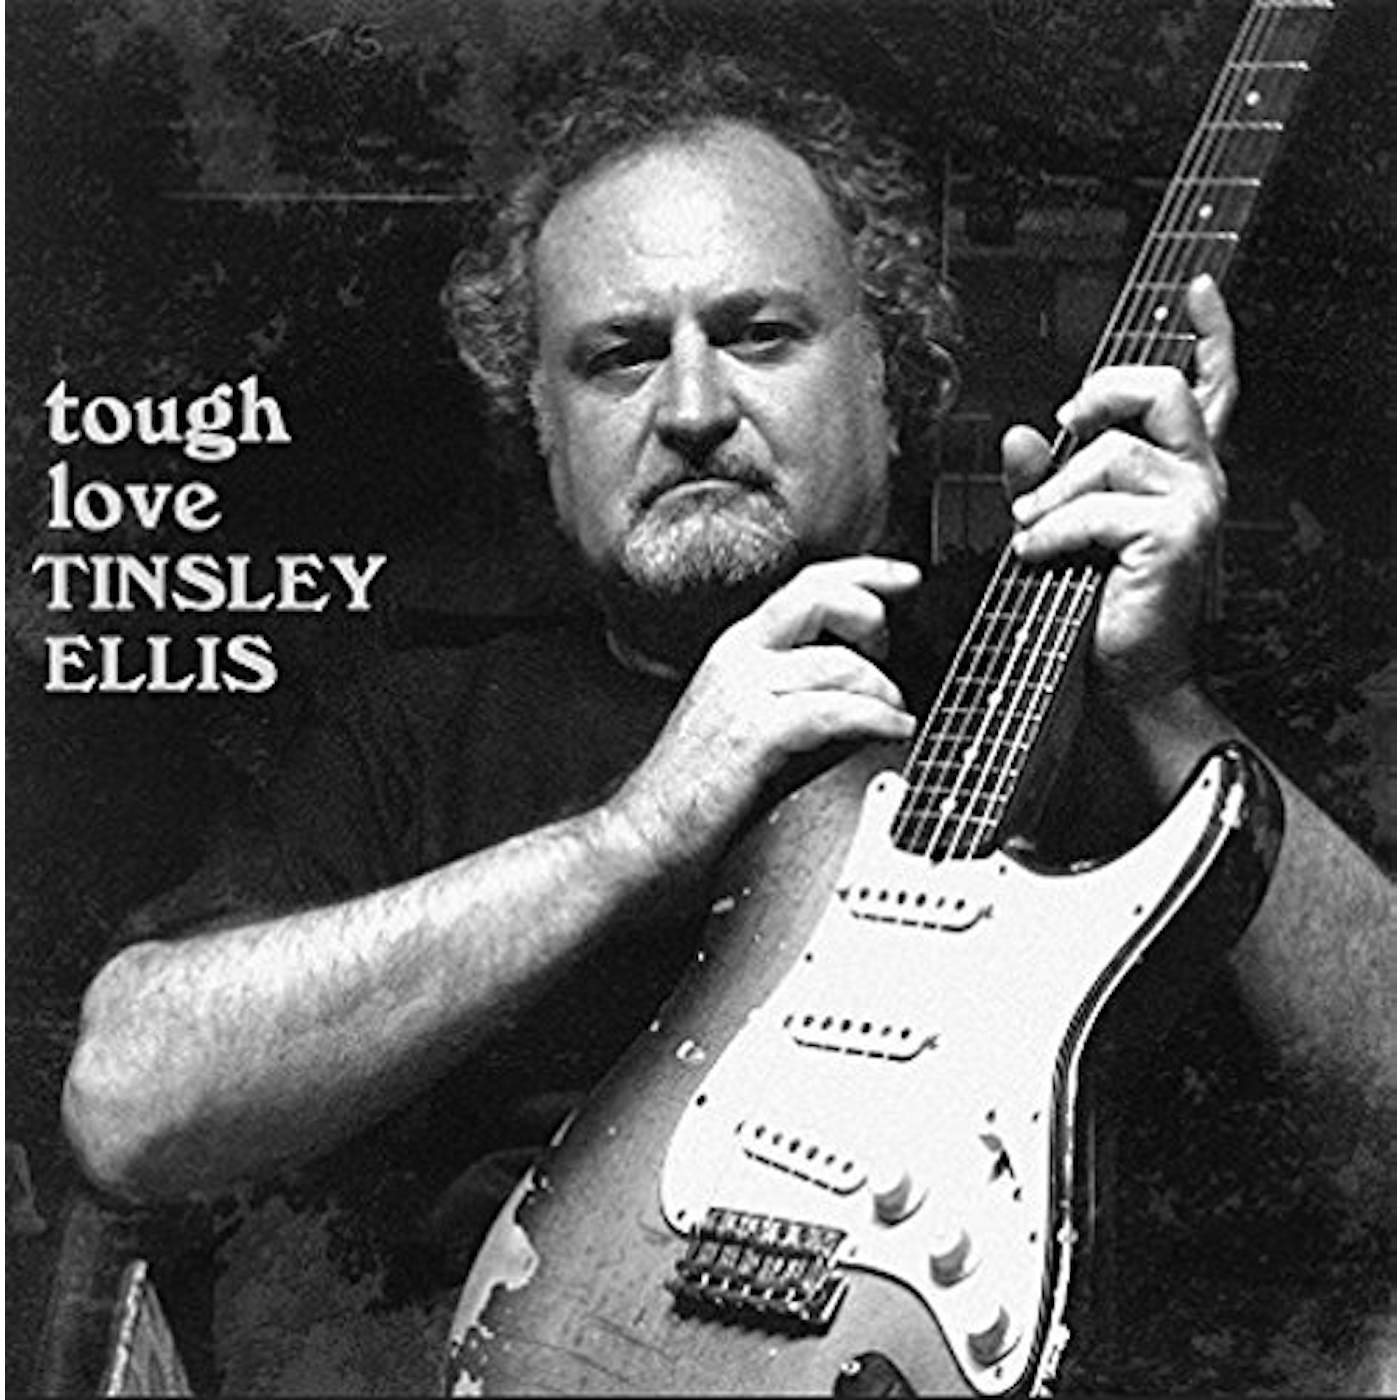 Tinsley Ellis TOUGH LOVE CD